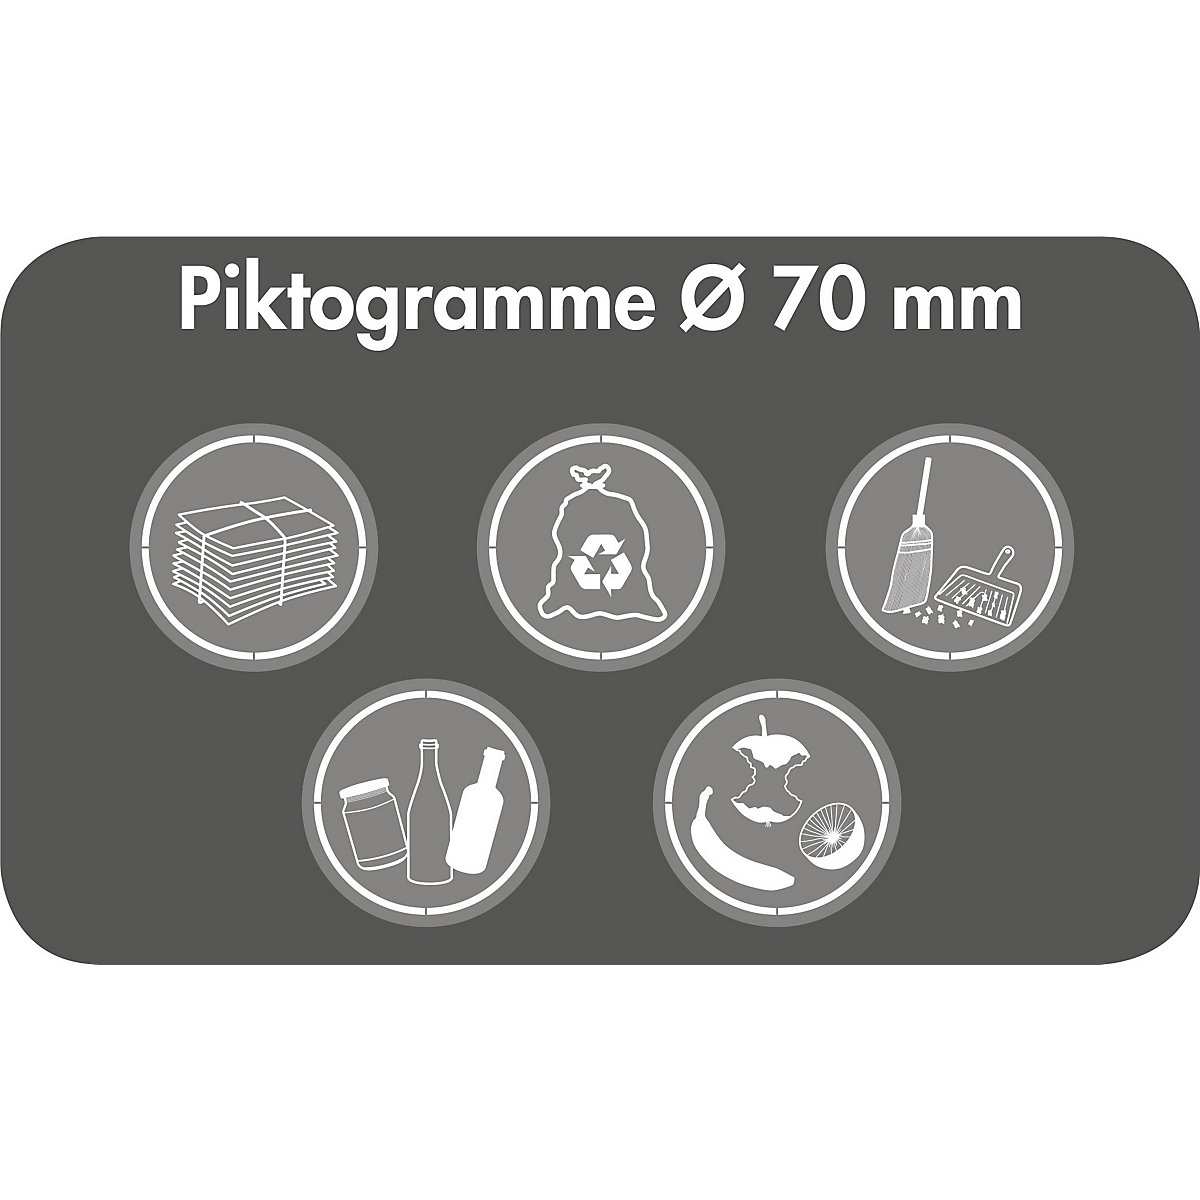 Pictograms, Ø 70 mm, international